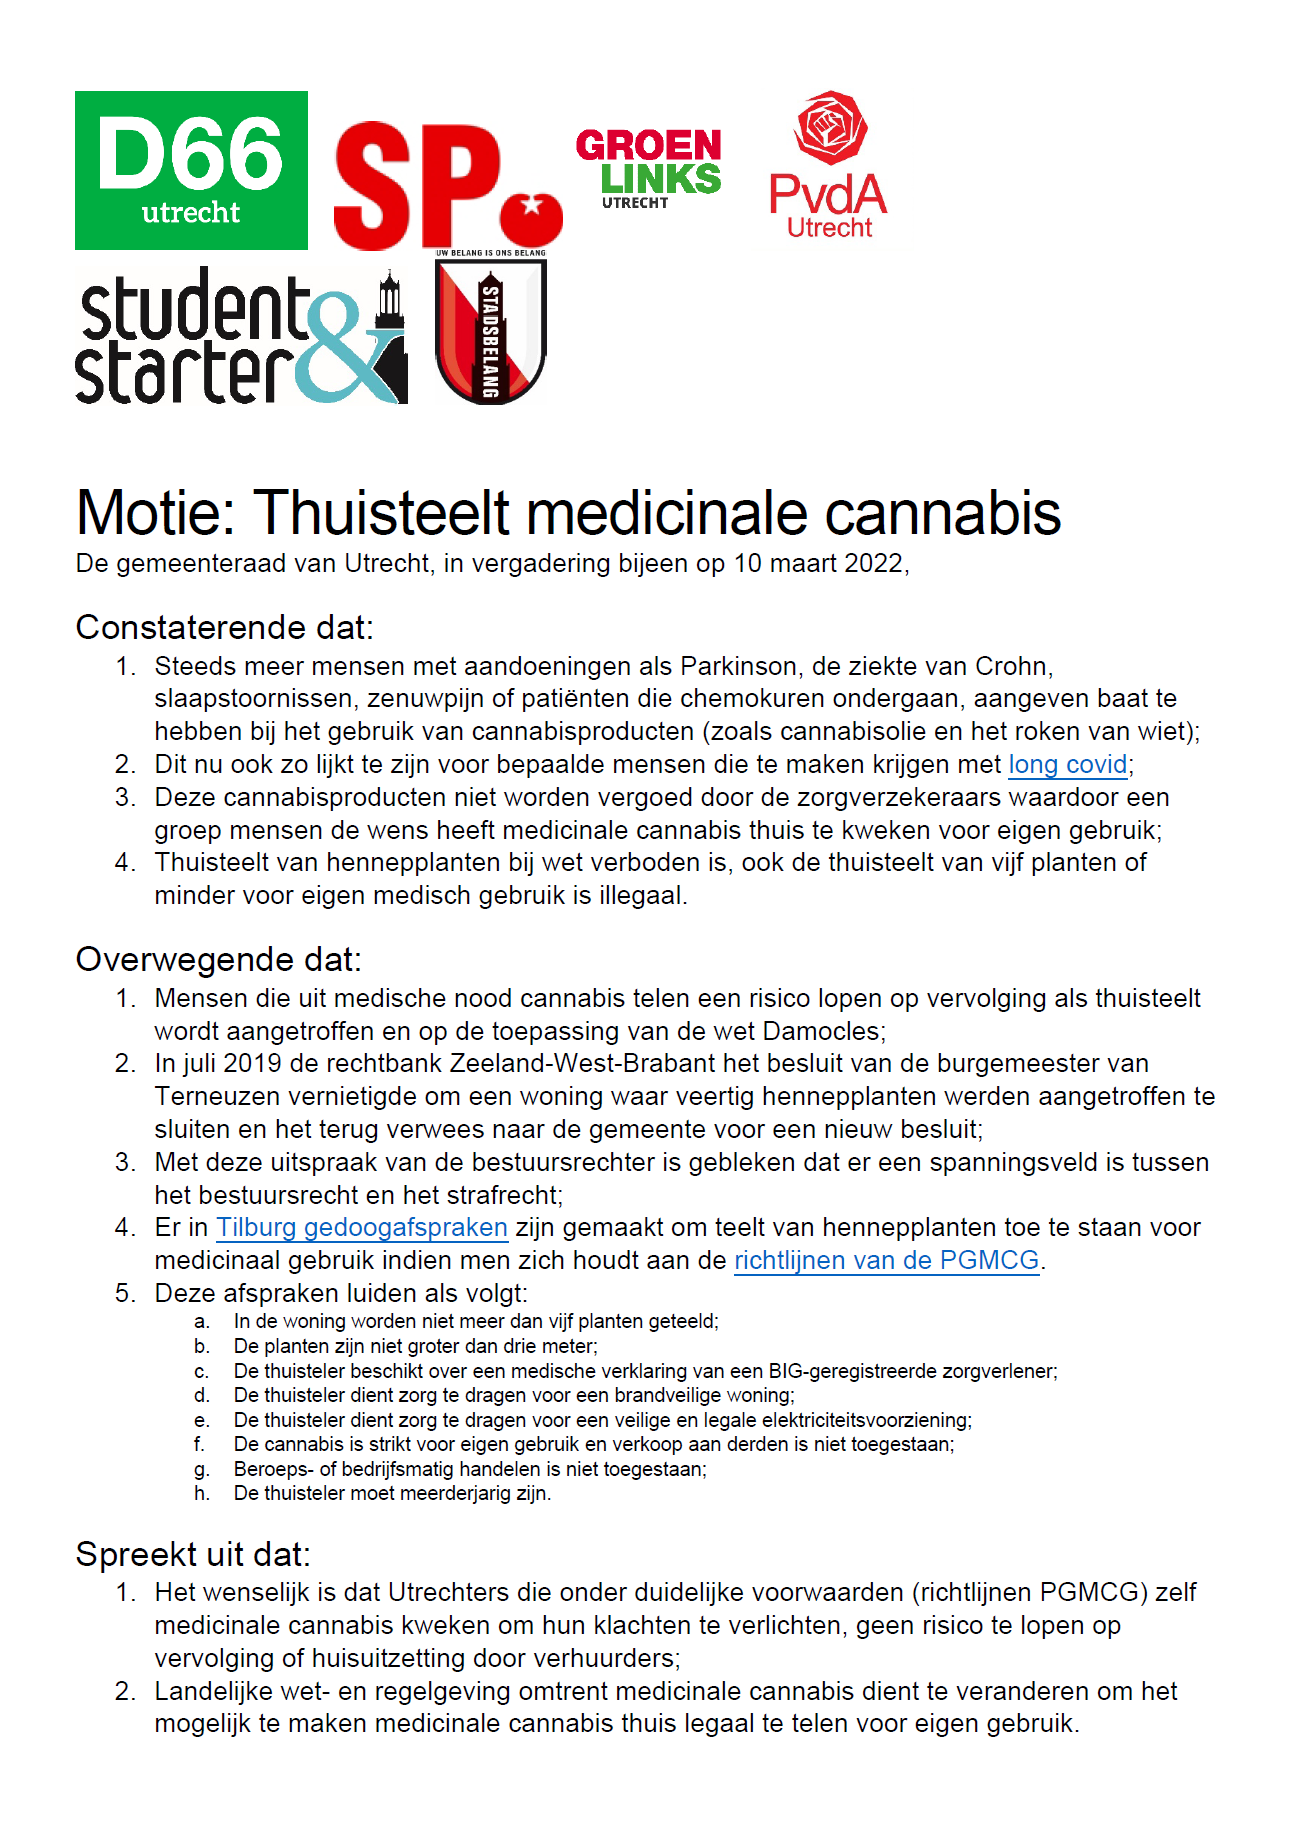 Utrecht motie thuisteelt medicinale cannabis 10 03 2022